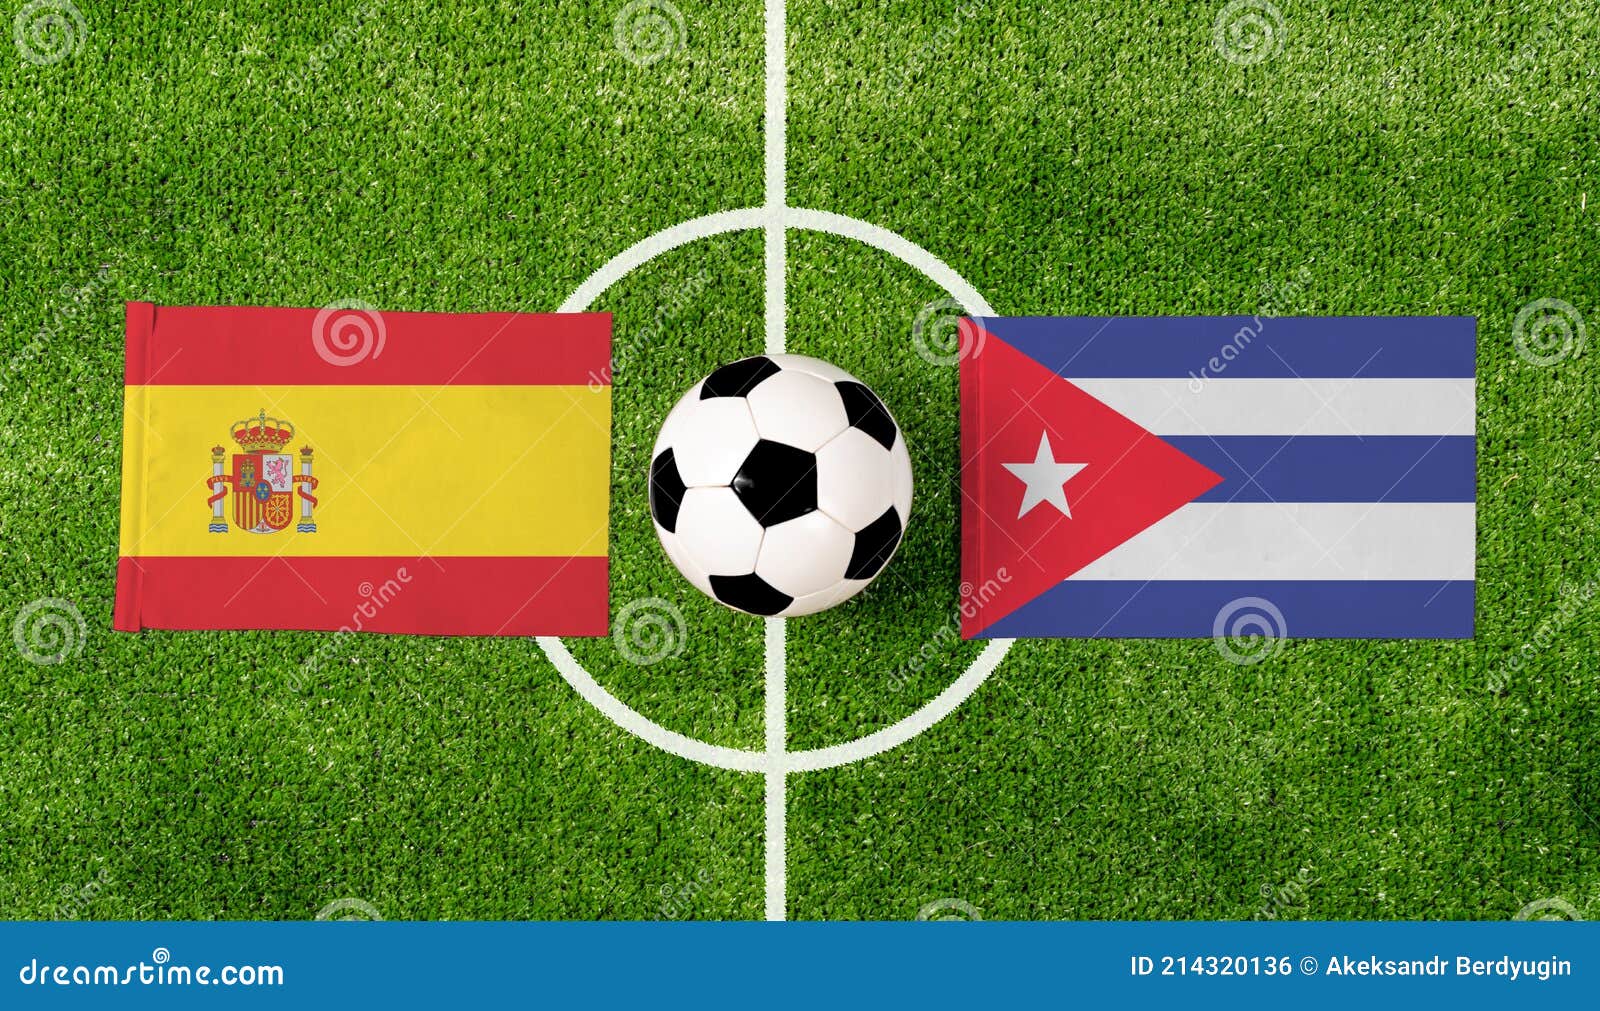 Cuba vs Spain scores & schedule